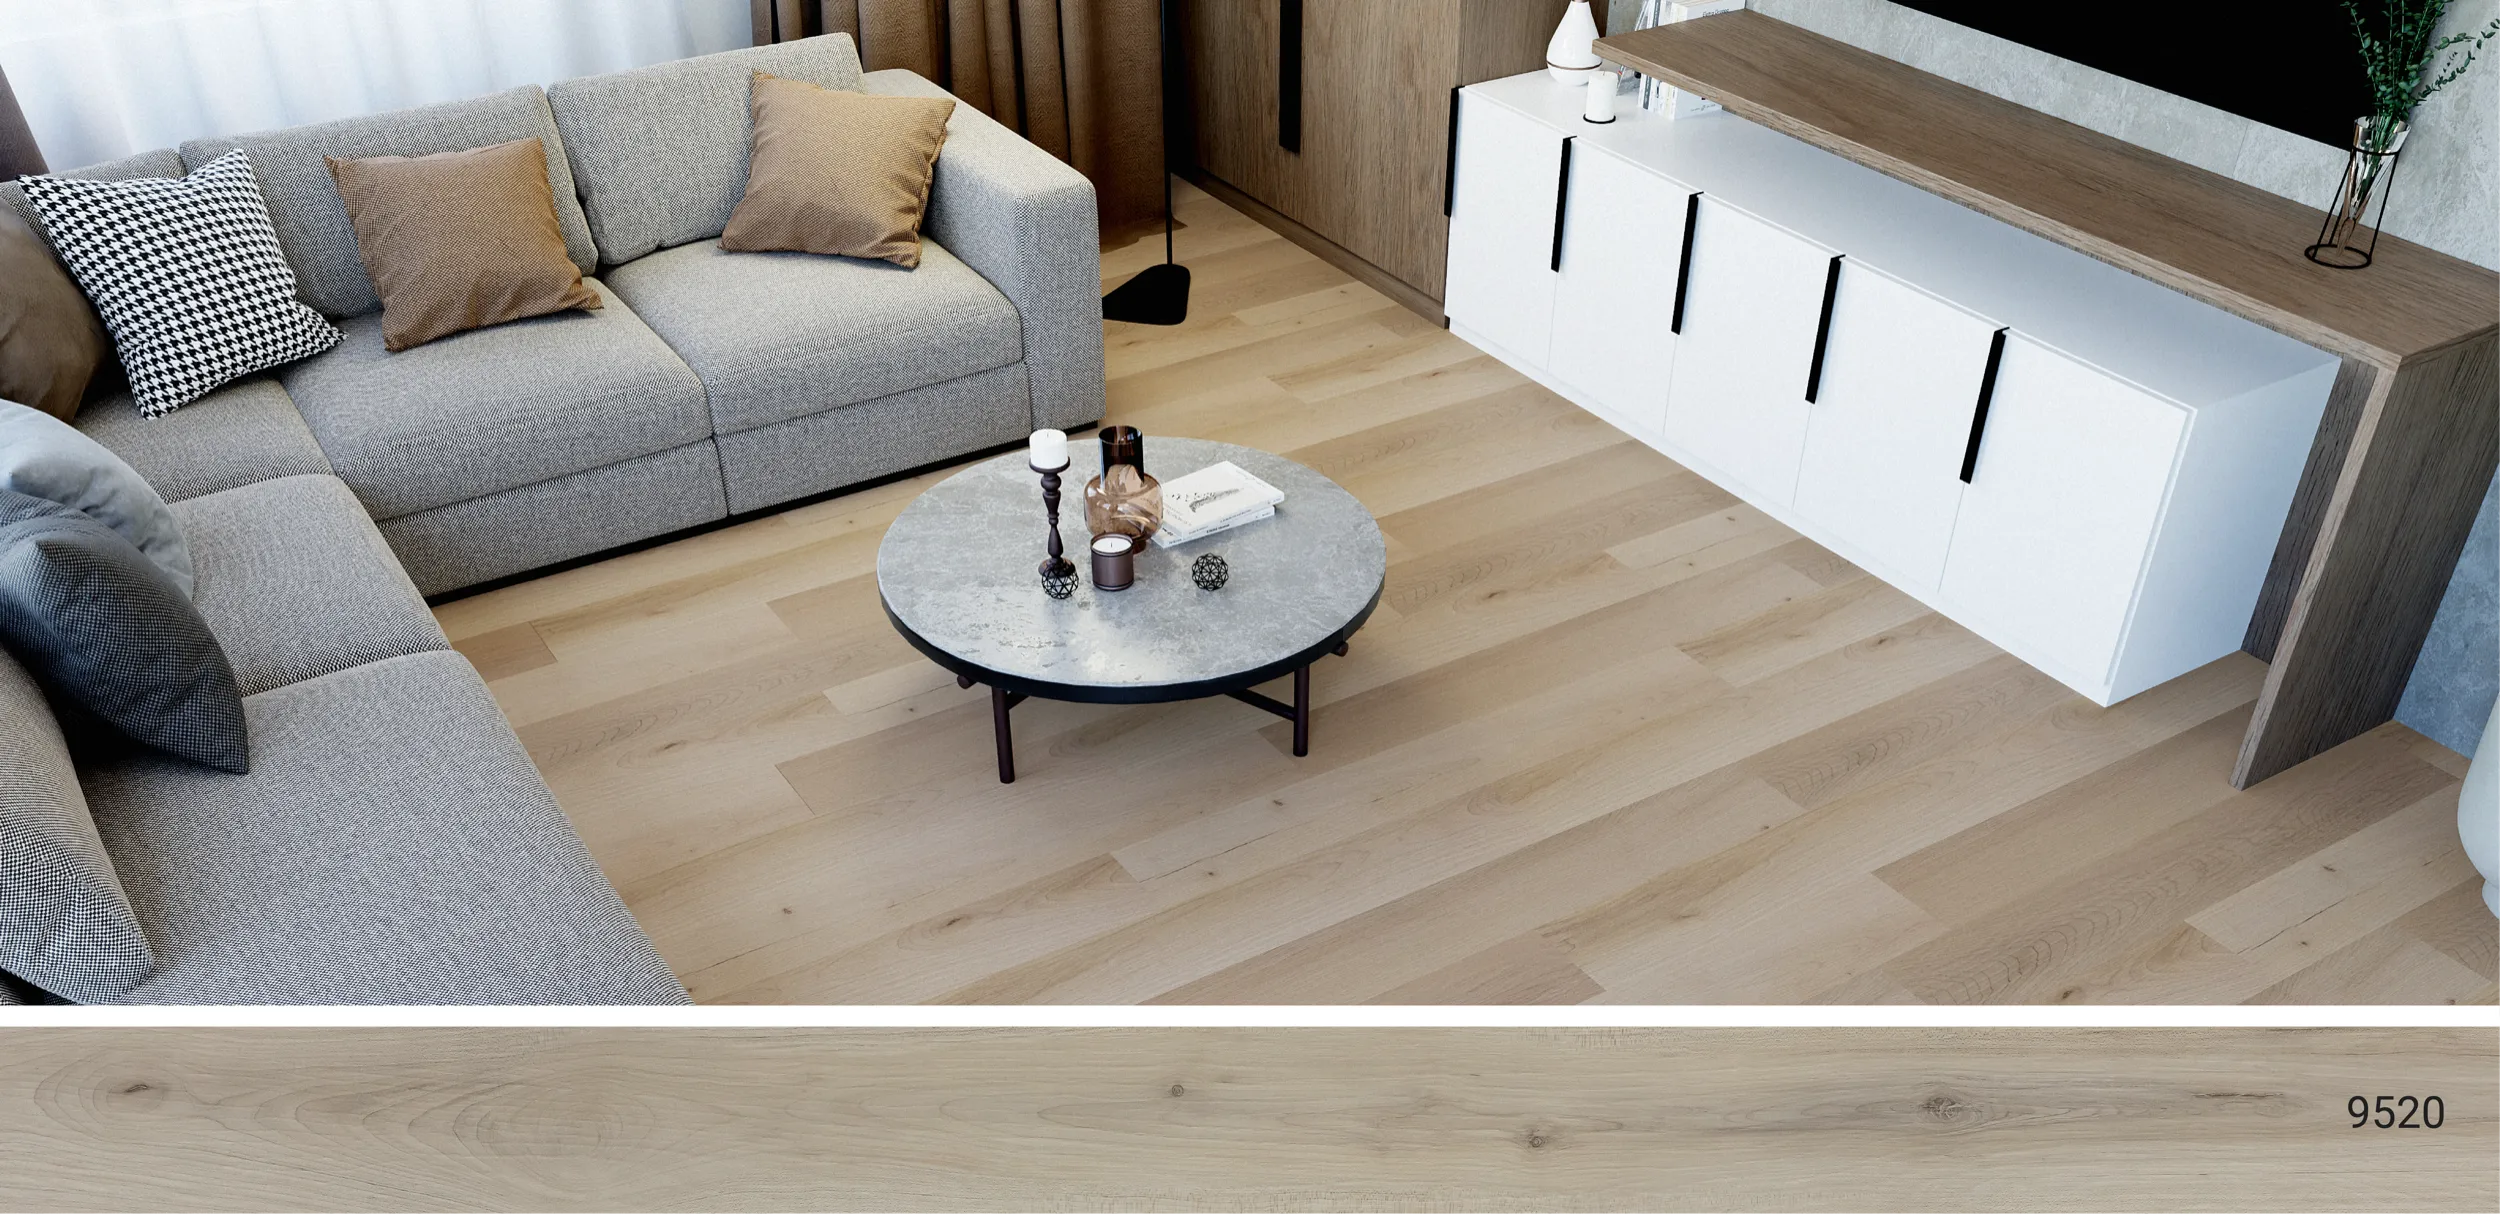 Living room with luxury vinyl flooring installed. SKU 9520 Caspian Heights by Urban Surfaces.